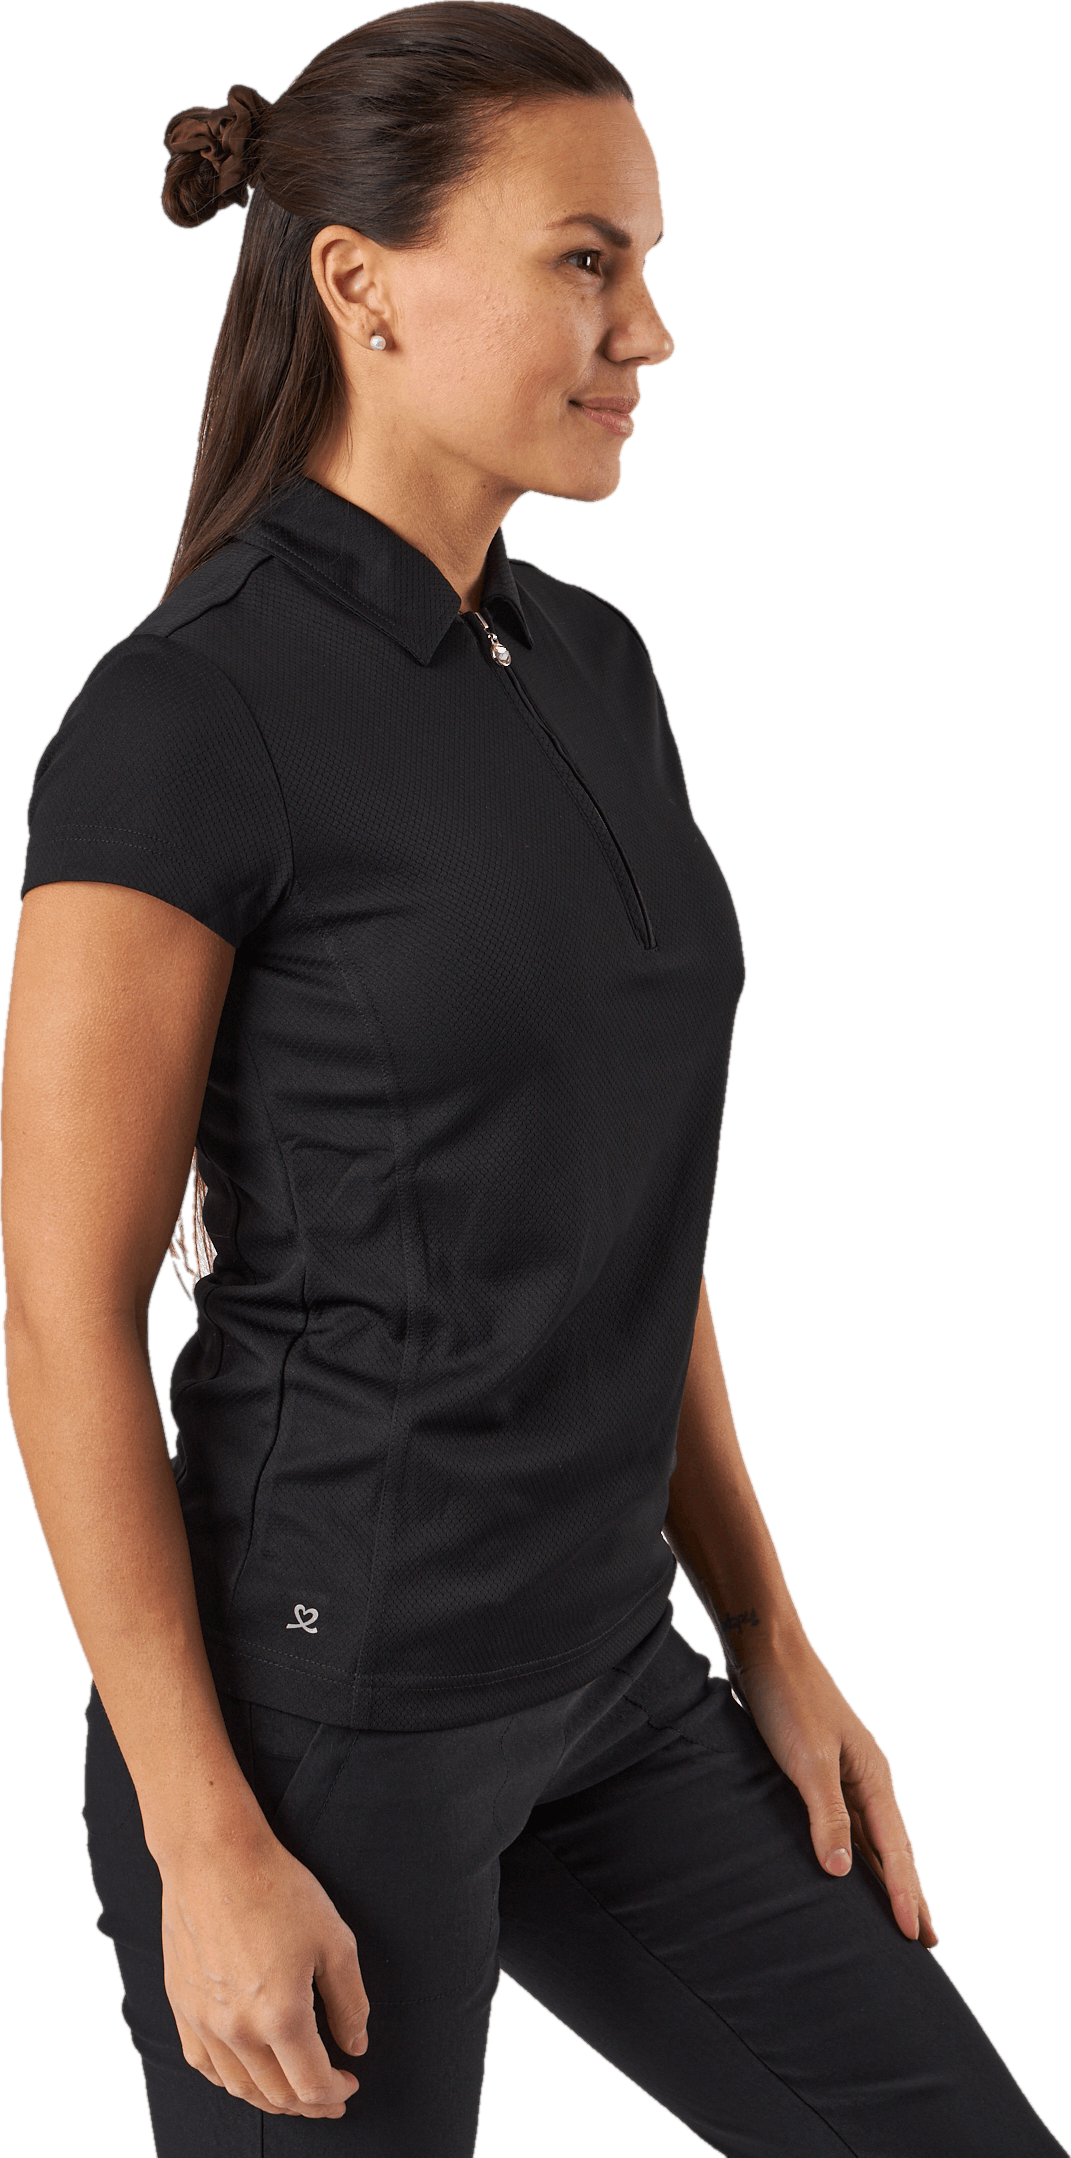 Macy S/S Polo Shirt Black